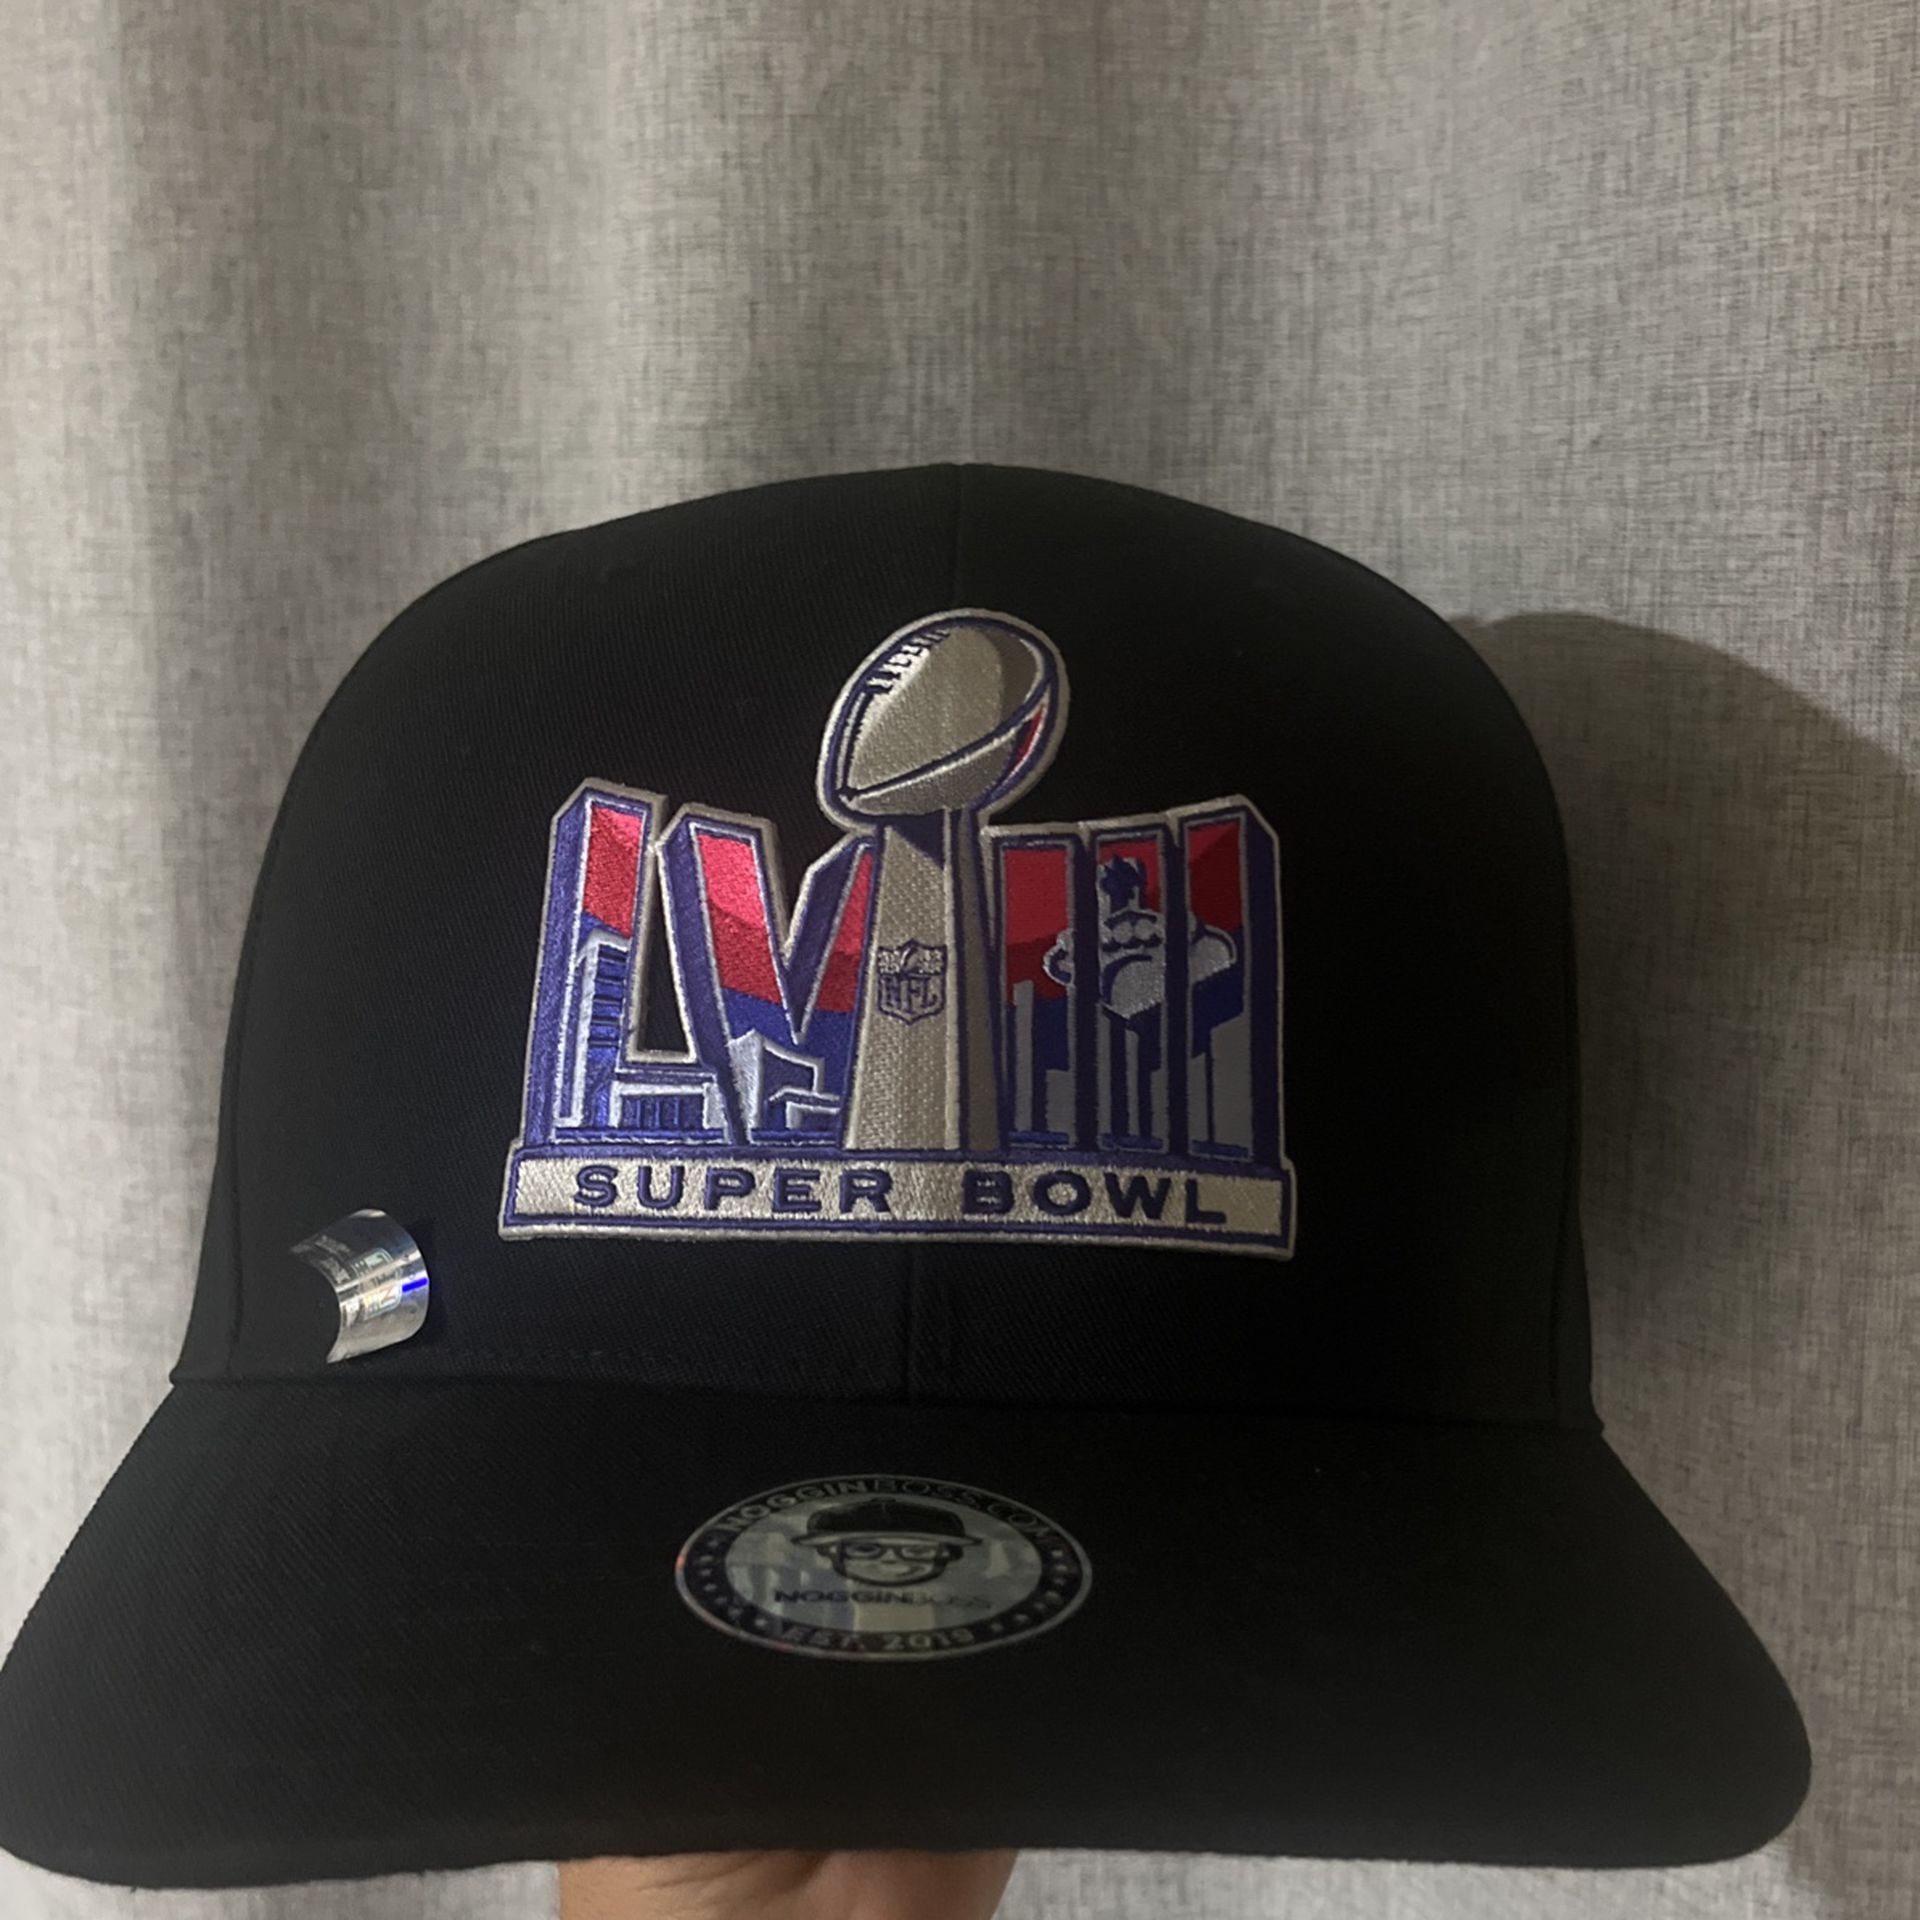 Noggin Boss Super Bowl Hat 